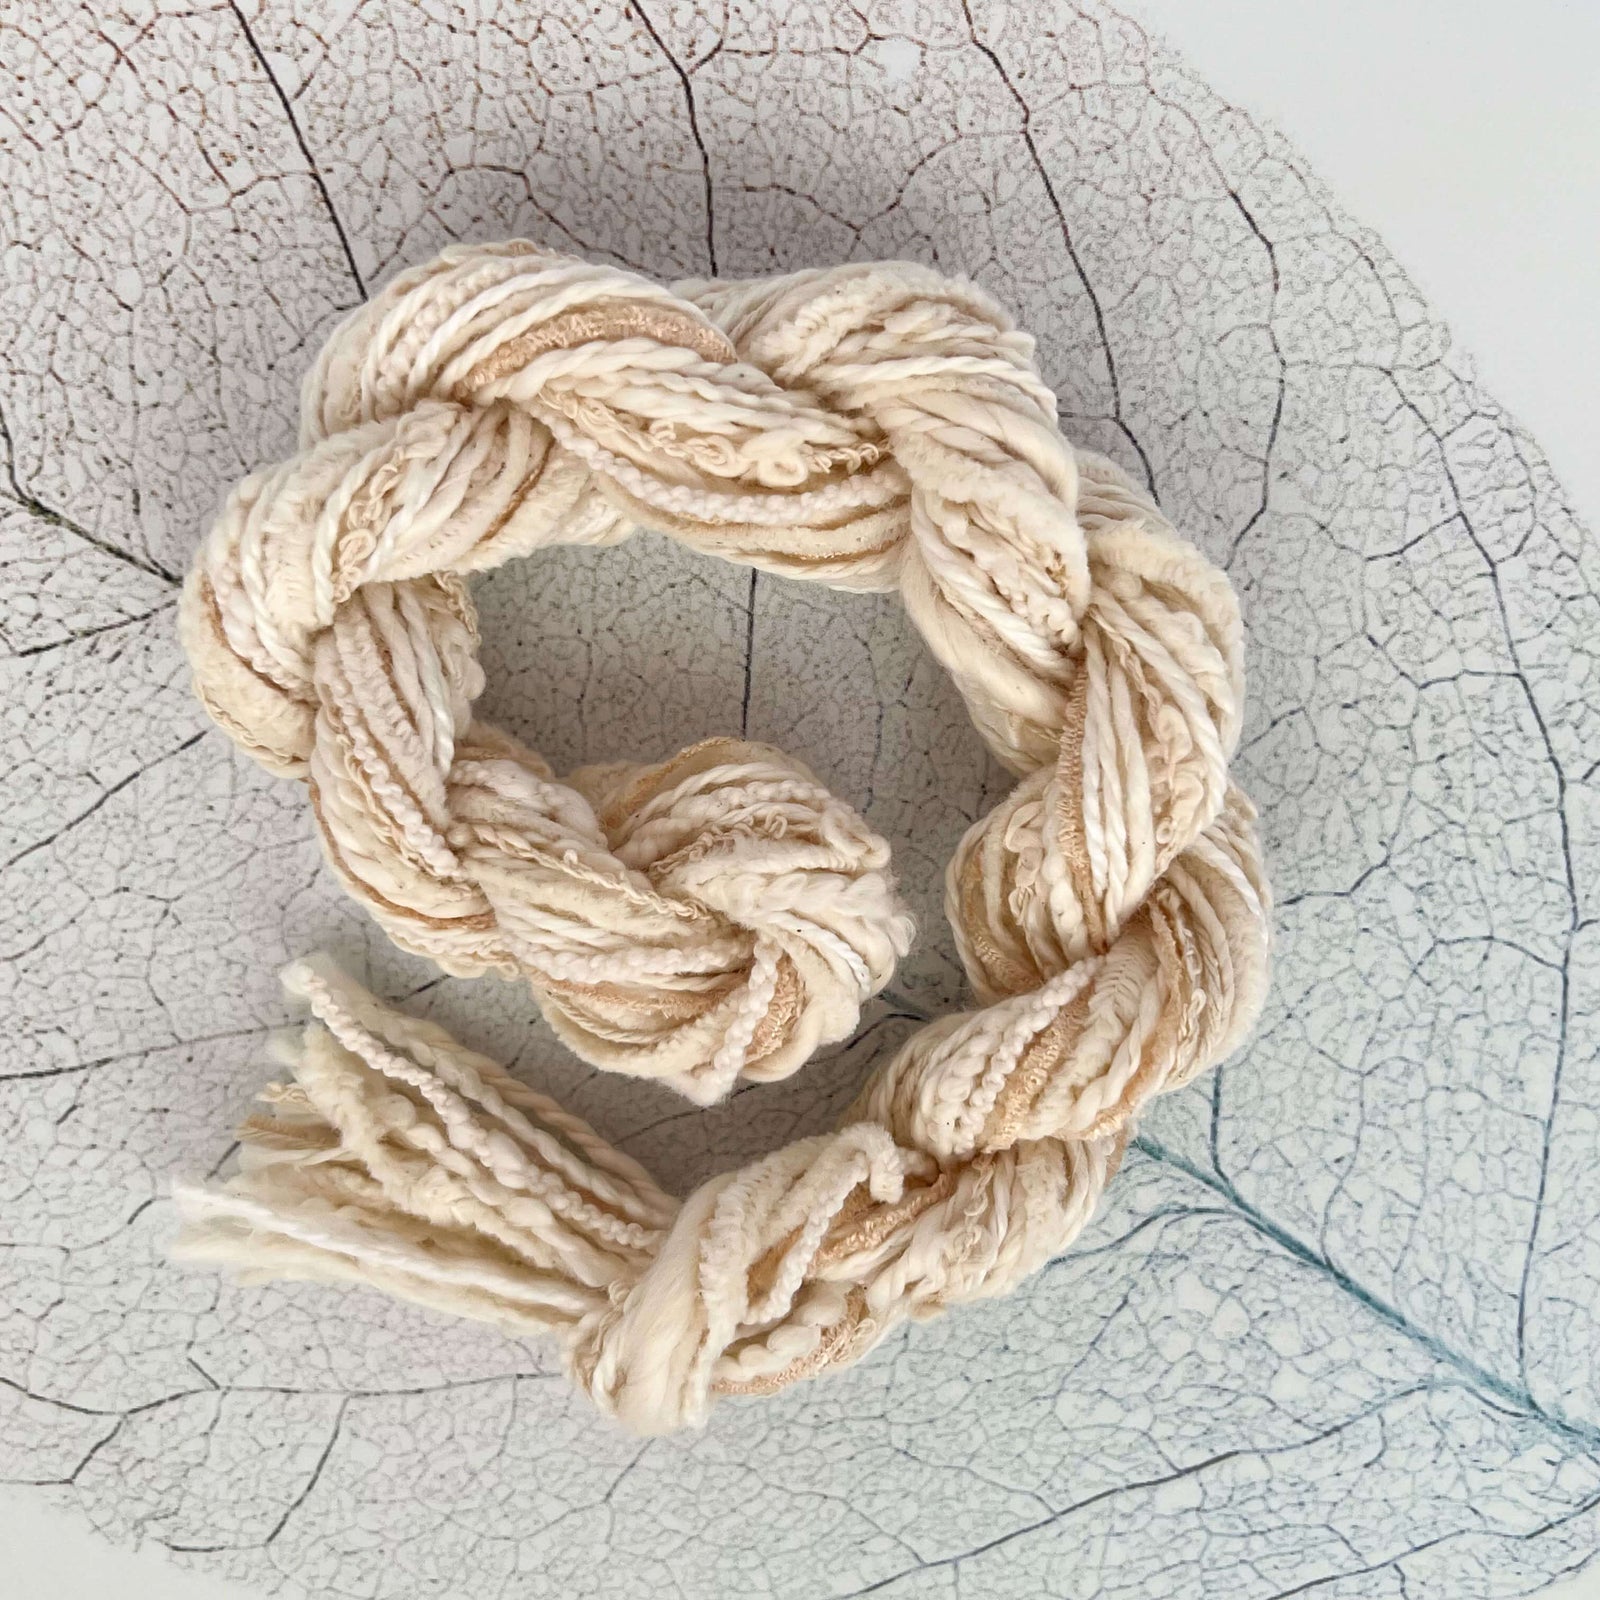 Wood Loom Weaving Kit - Alpaca Yarn - Colors of Autumn - The Creativity  Patch - Lucy Jennings